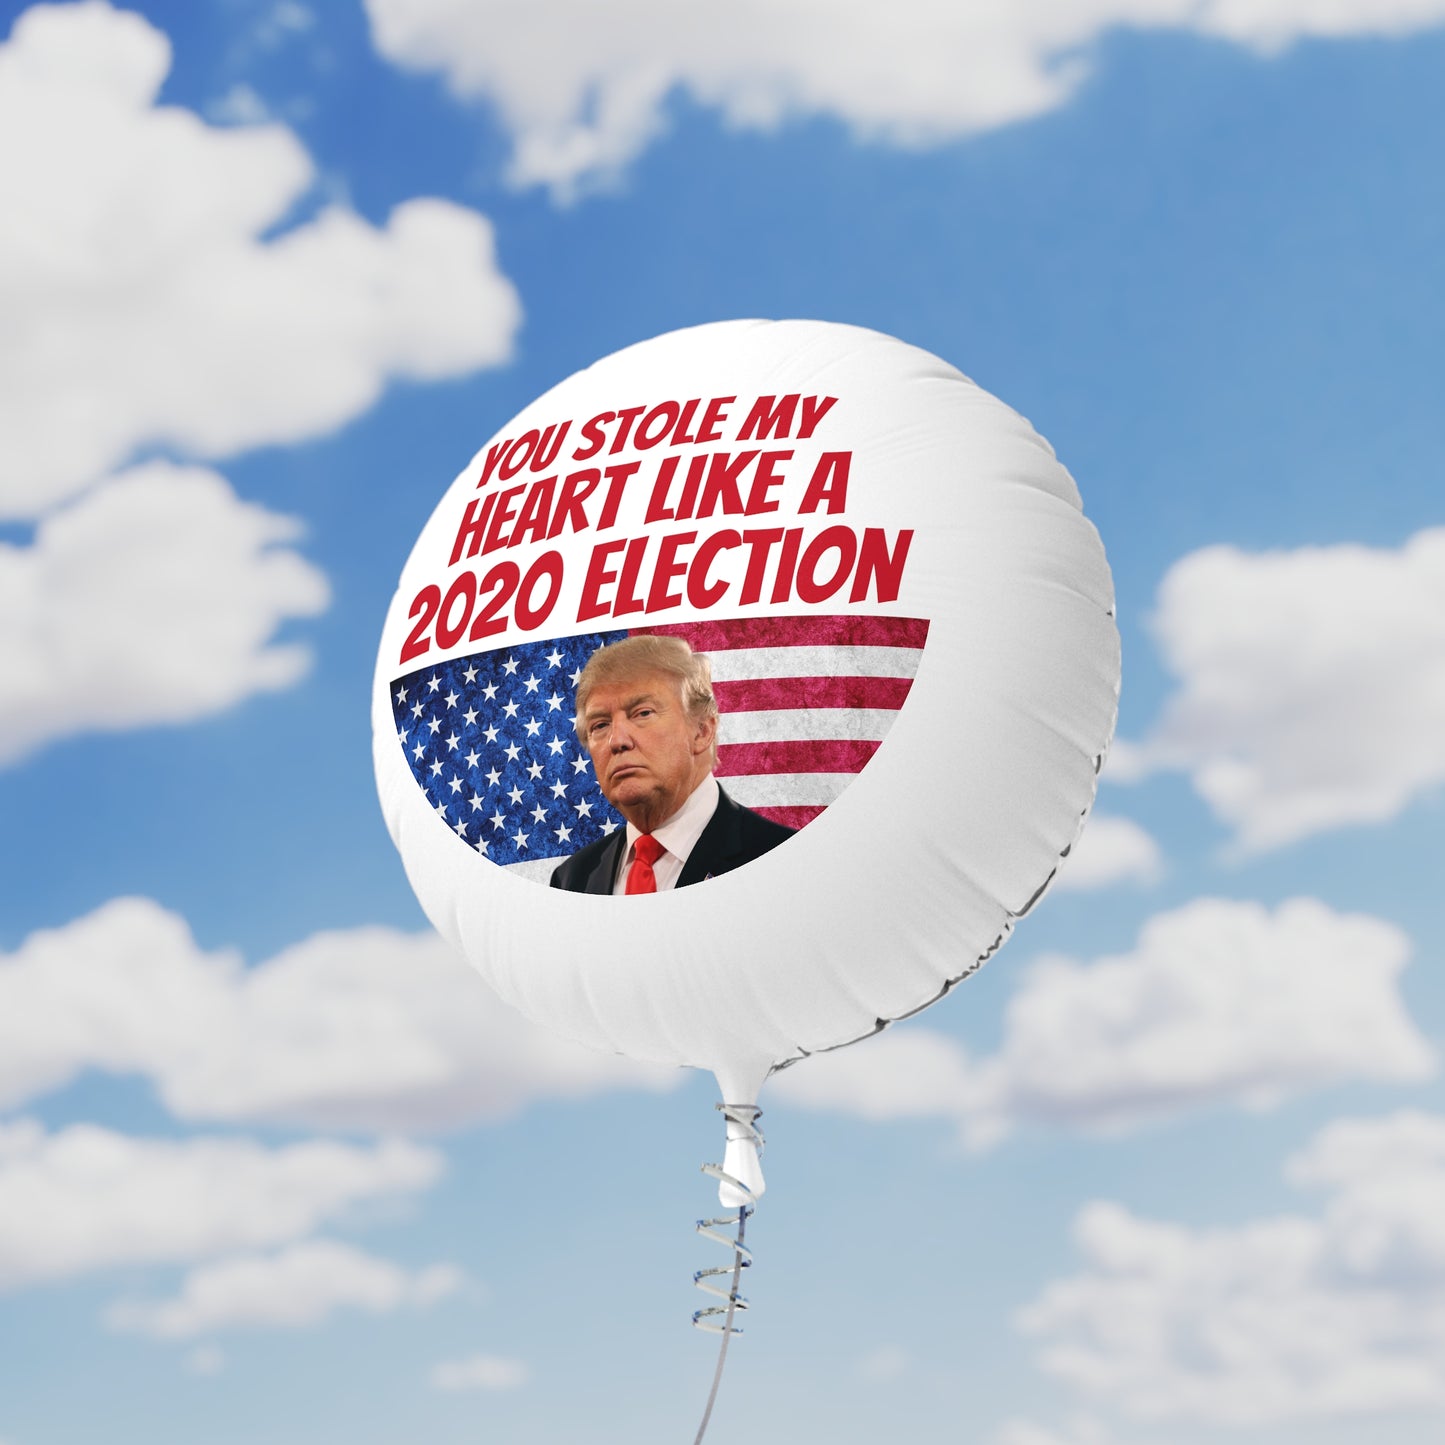 You Stole My Heart like a 2020 Election MAGA Mylar Helium Balloon Reusable